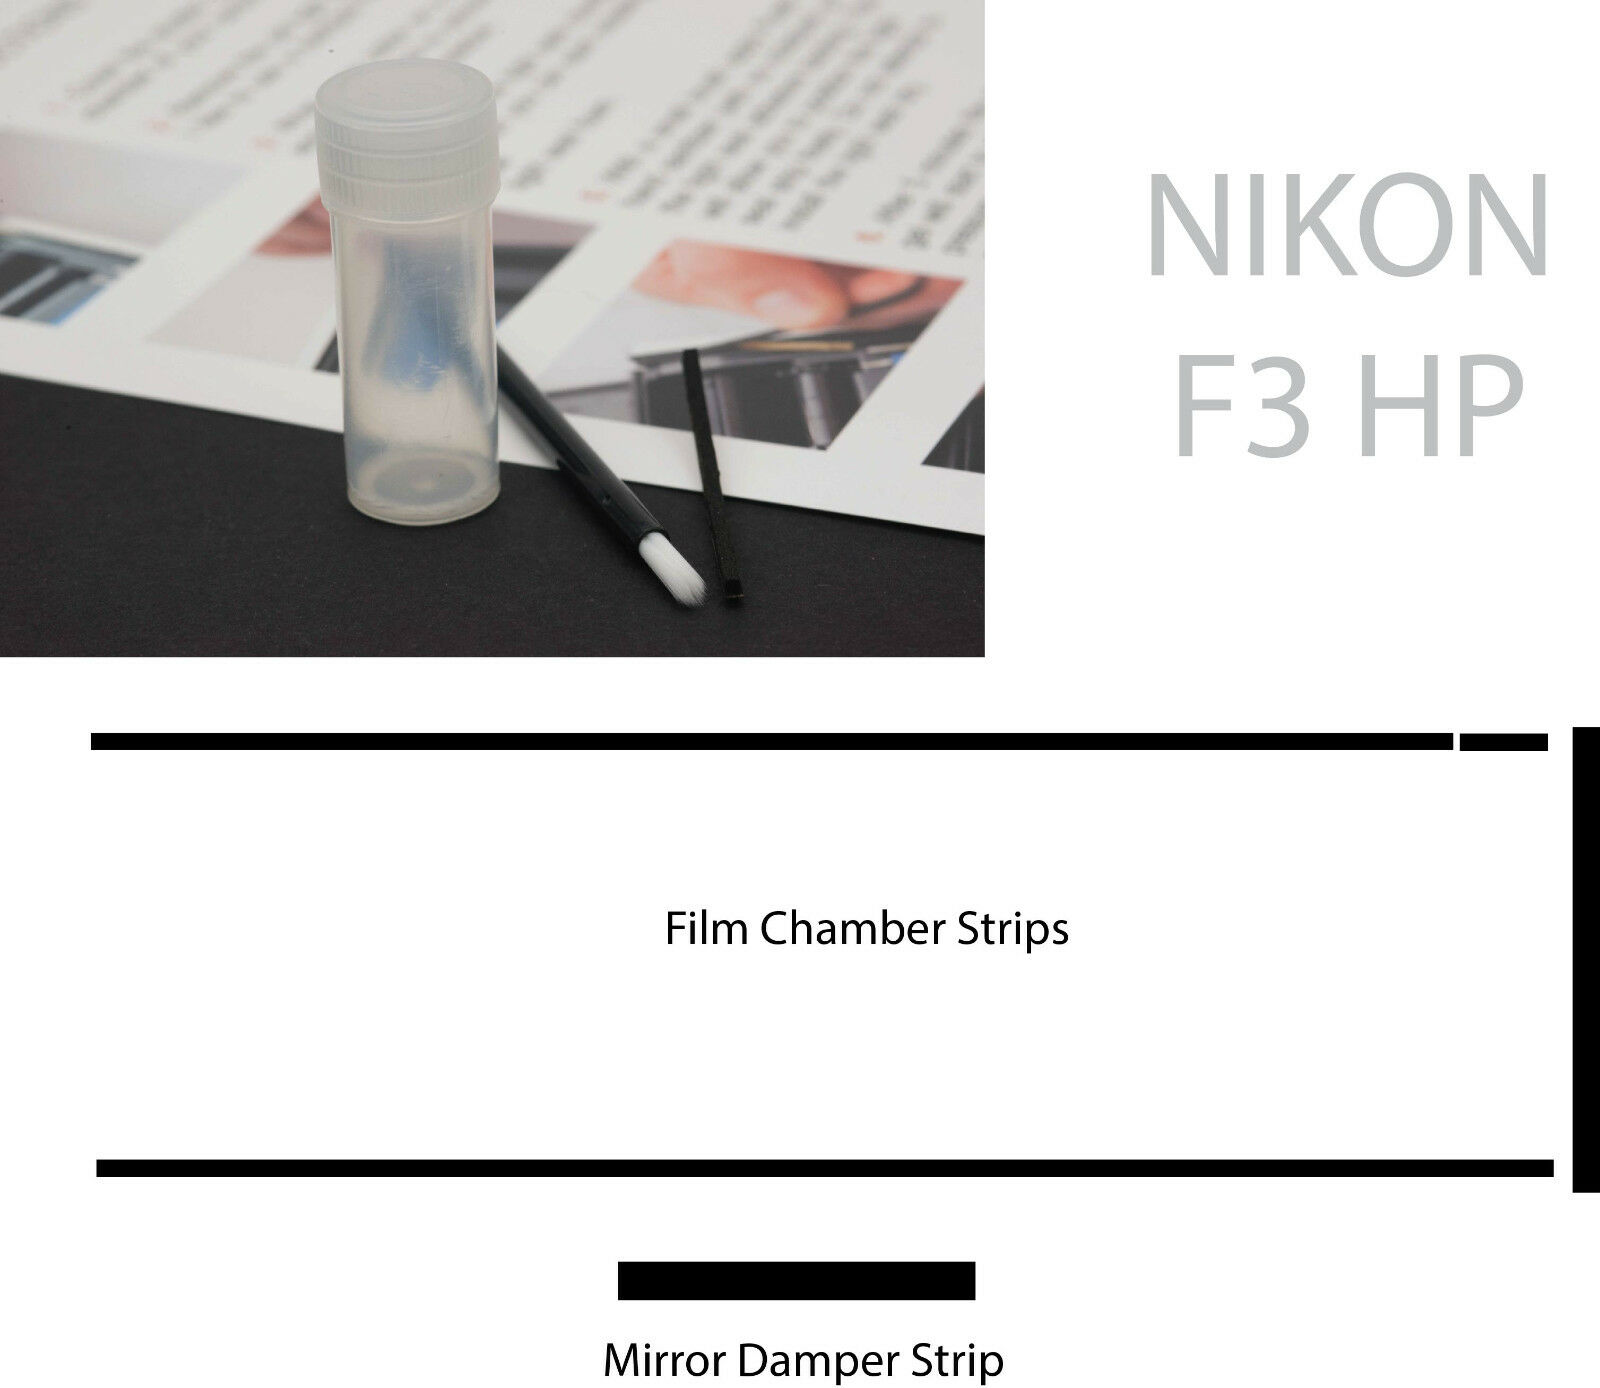 Nikon F3 Hp Light Seal Kit And Mirror Damper